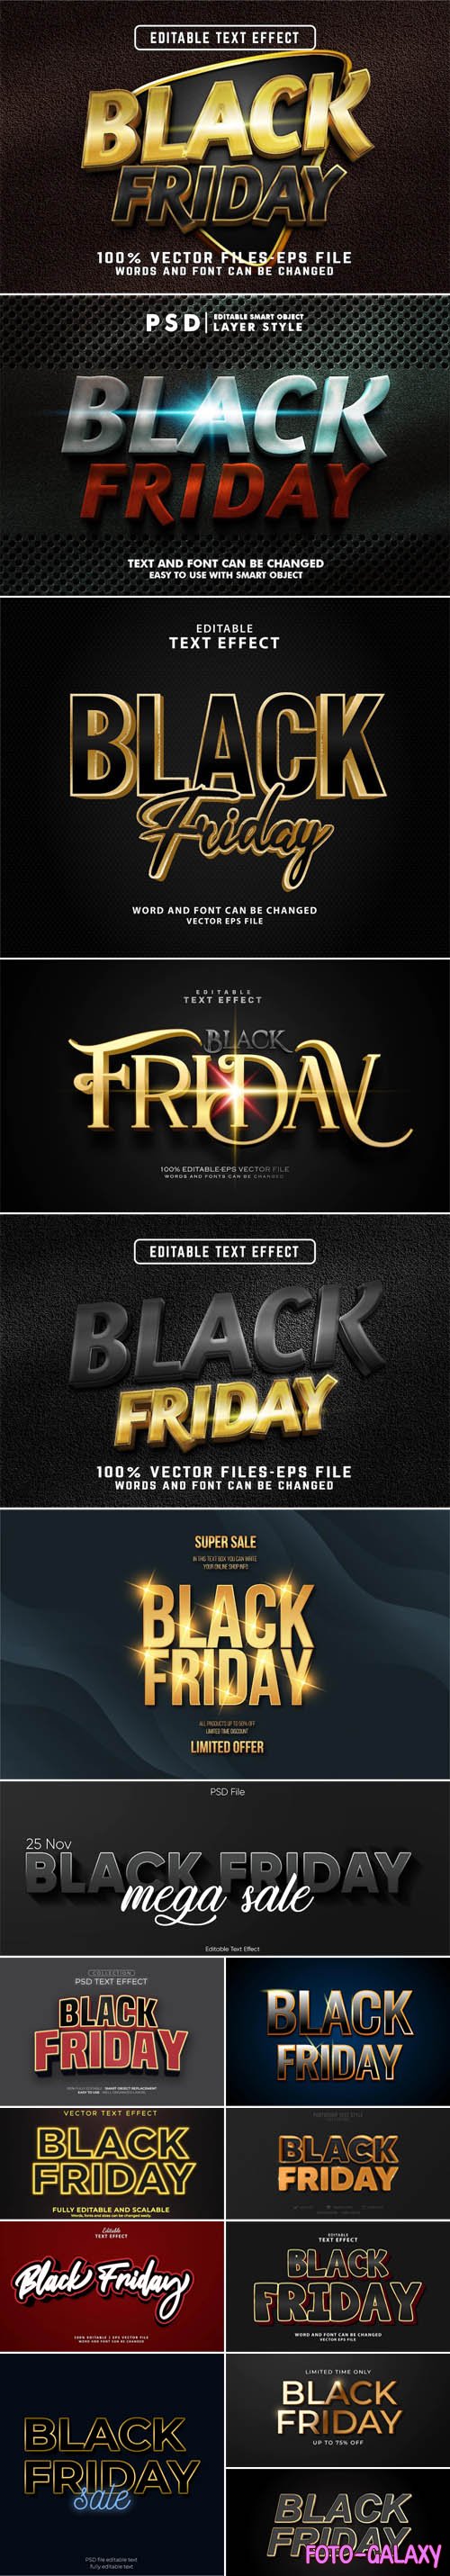 Modern Black Friday 3D Text Effects Vector Templates [Vol.4]